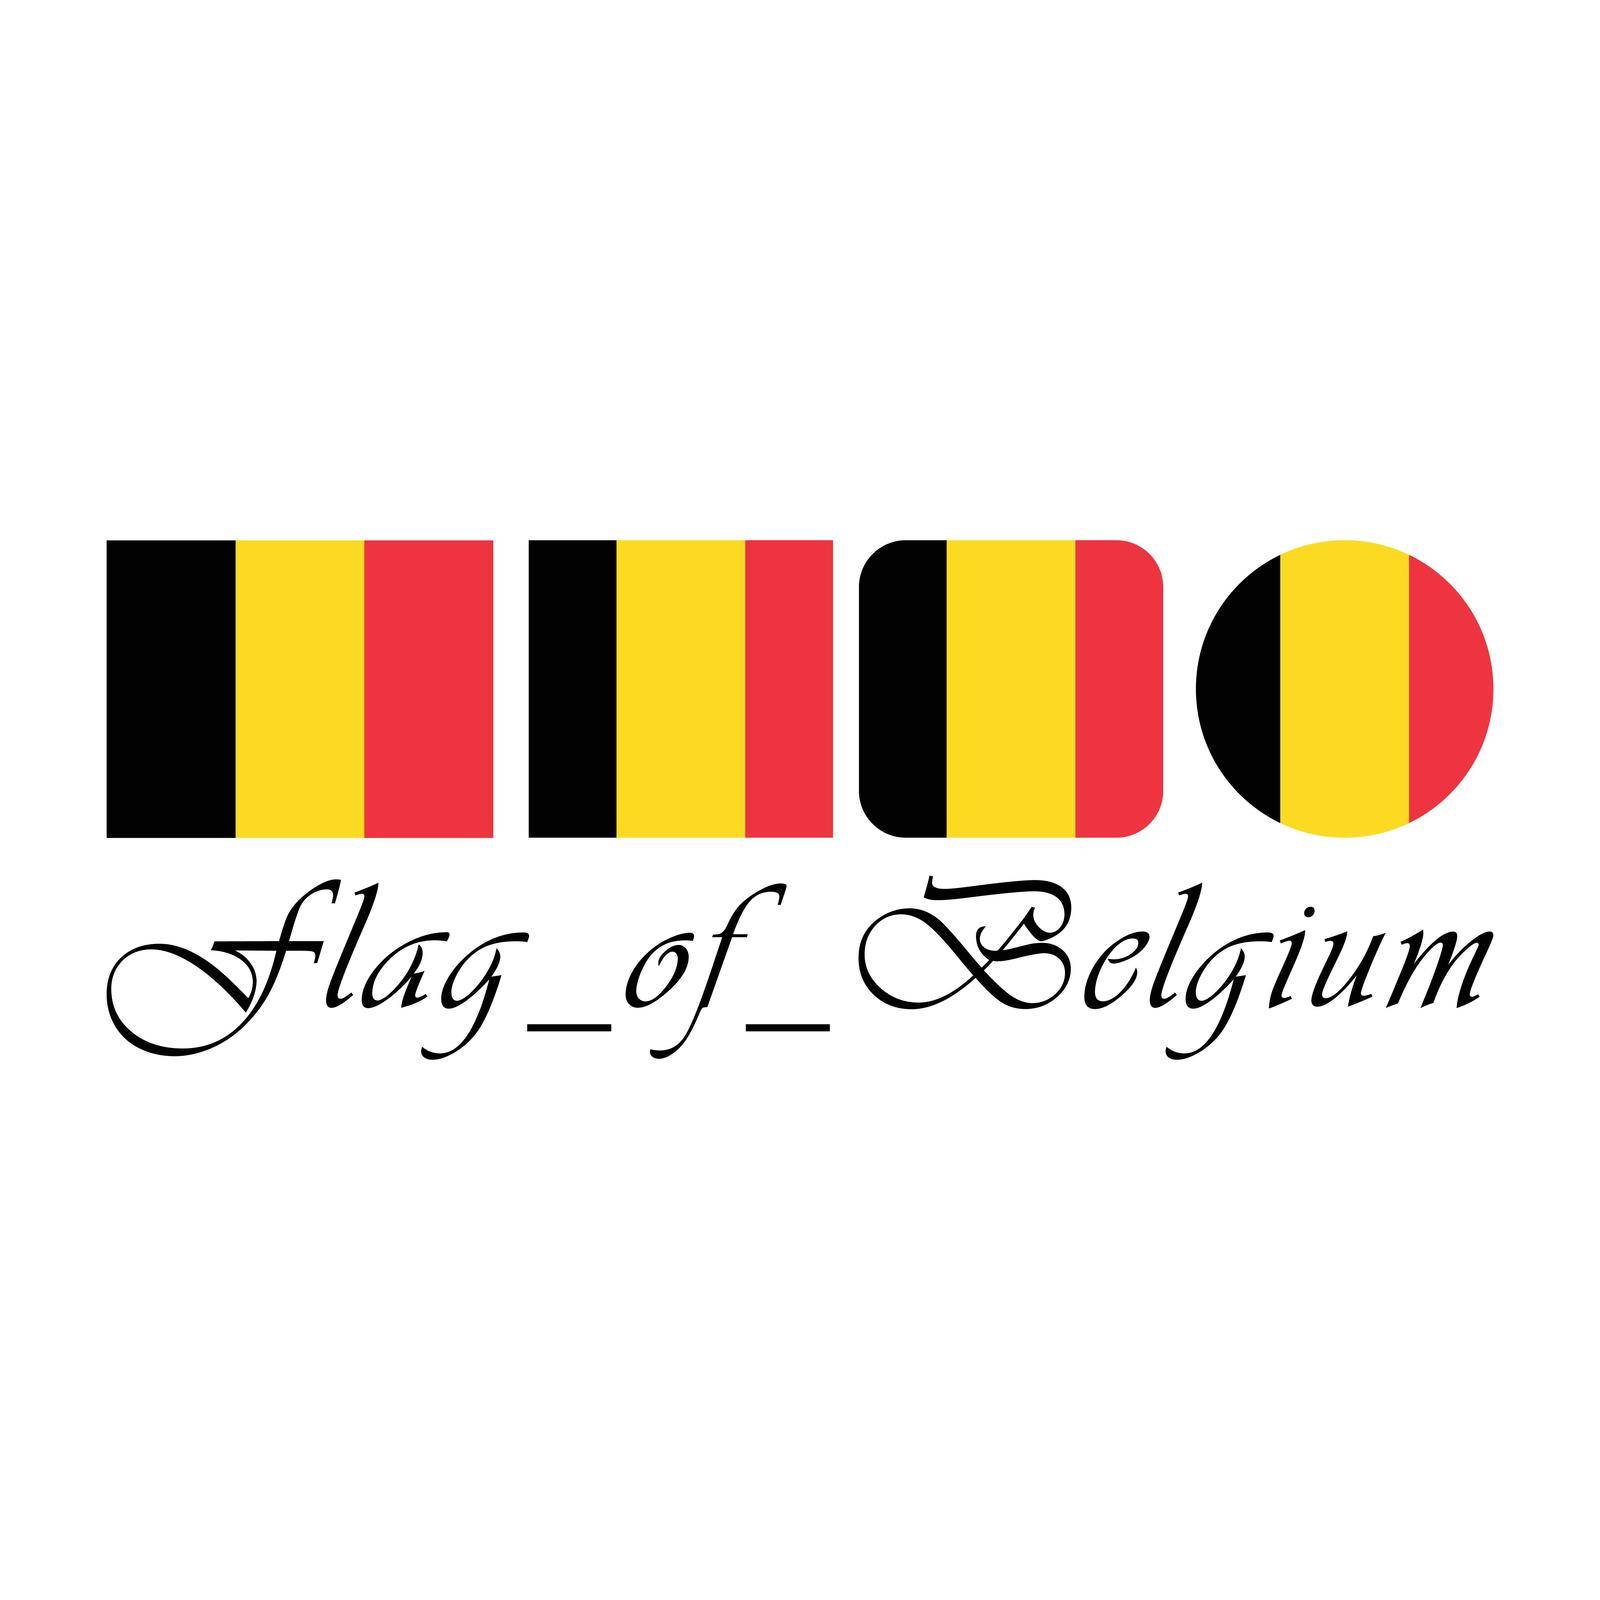 Flag of Belgium nation design artwork by Menyoen